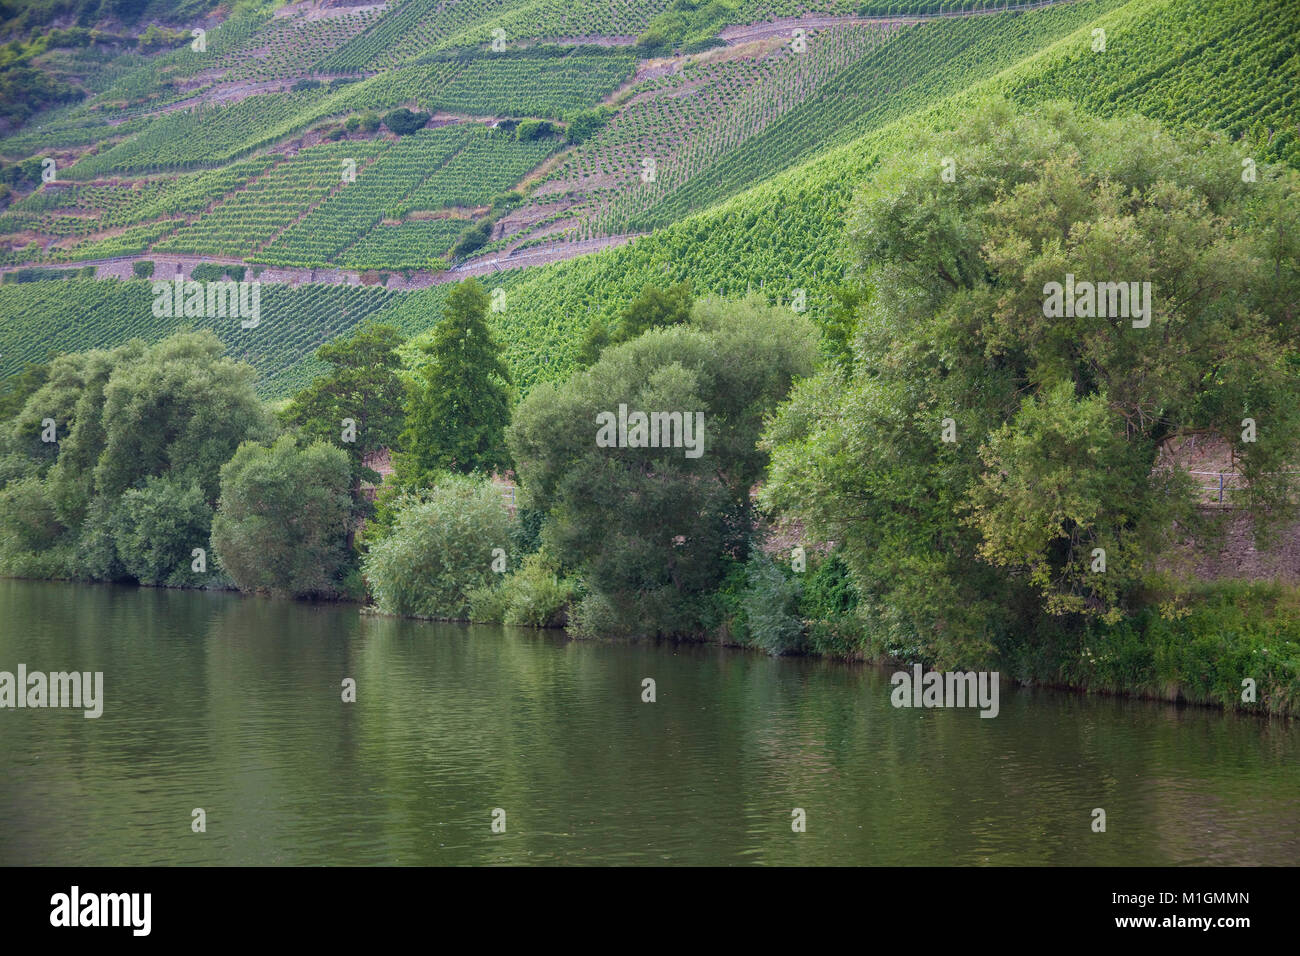 Trees and vineyard, wine growing at riverside, Piesport, Moselle river, Rhineland-Palatinate, Germany, Europe Stock Photo